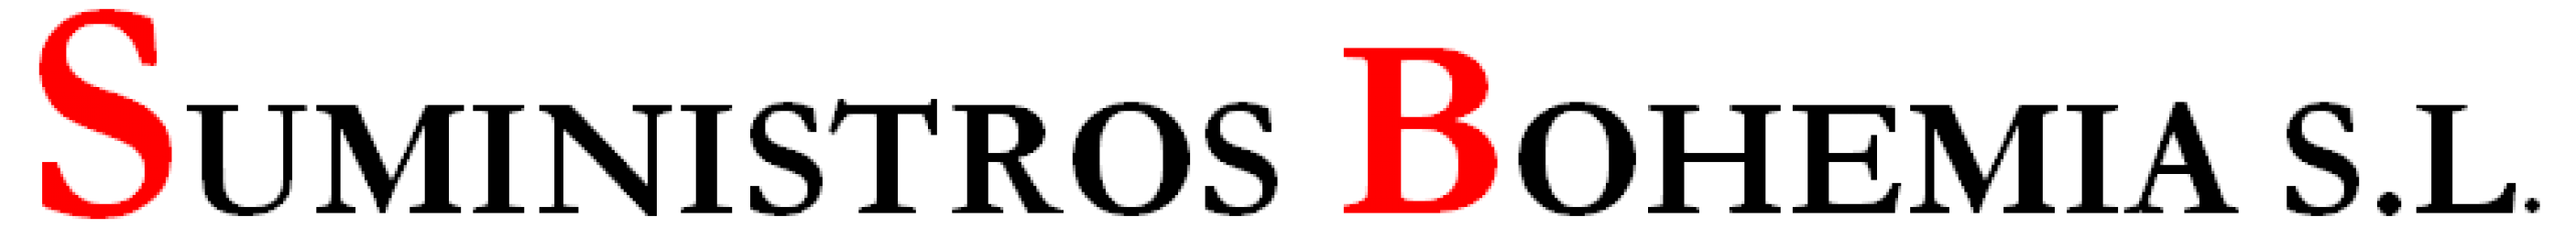 suministros-bohemia-logo